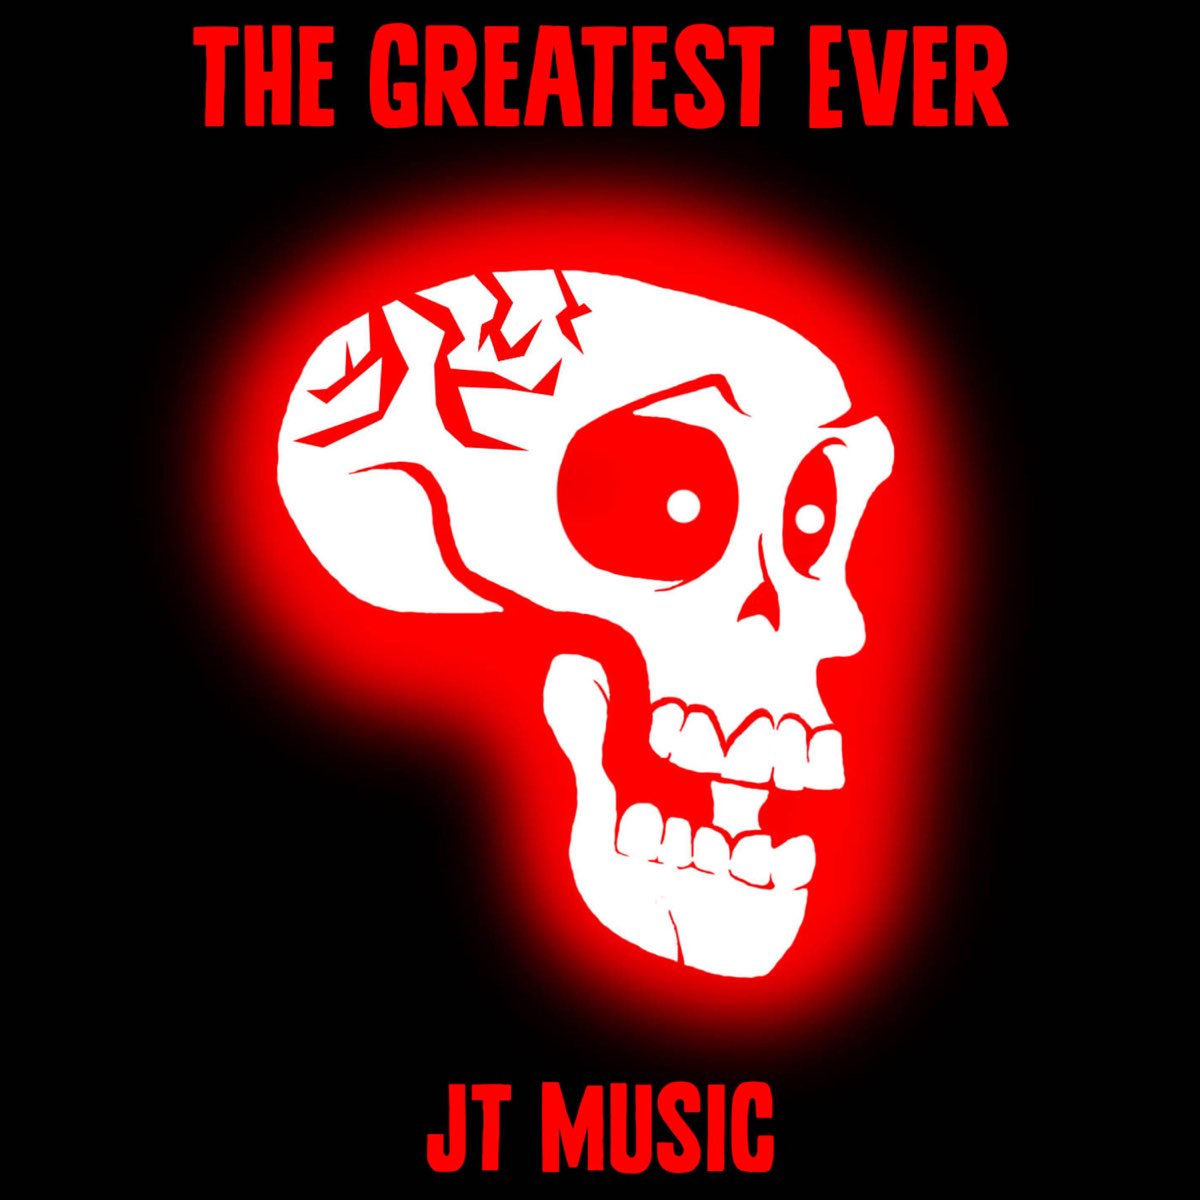 Jt music to the bone. JT Machinima. J.T. Machinima. JT Machinima ПЭТ. JT Music логотип.